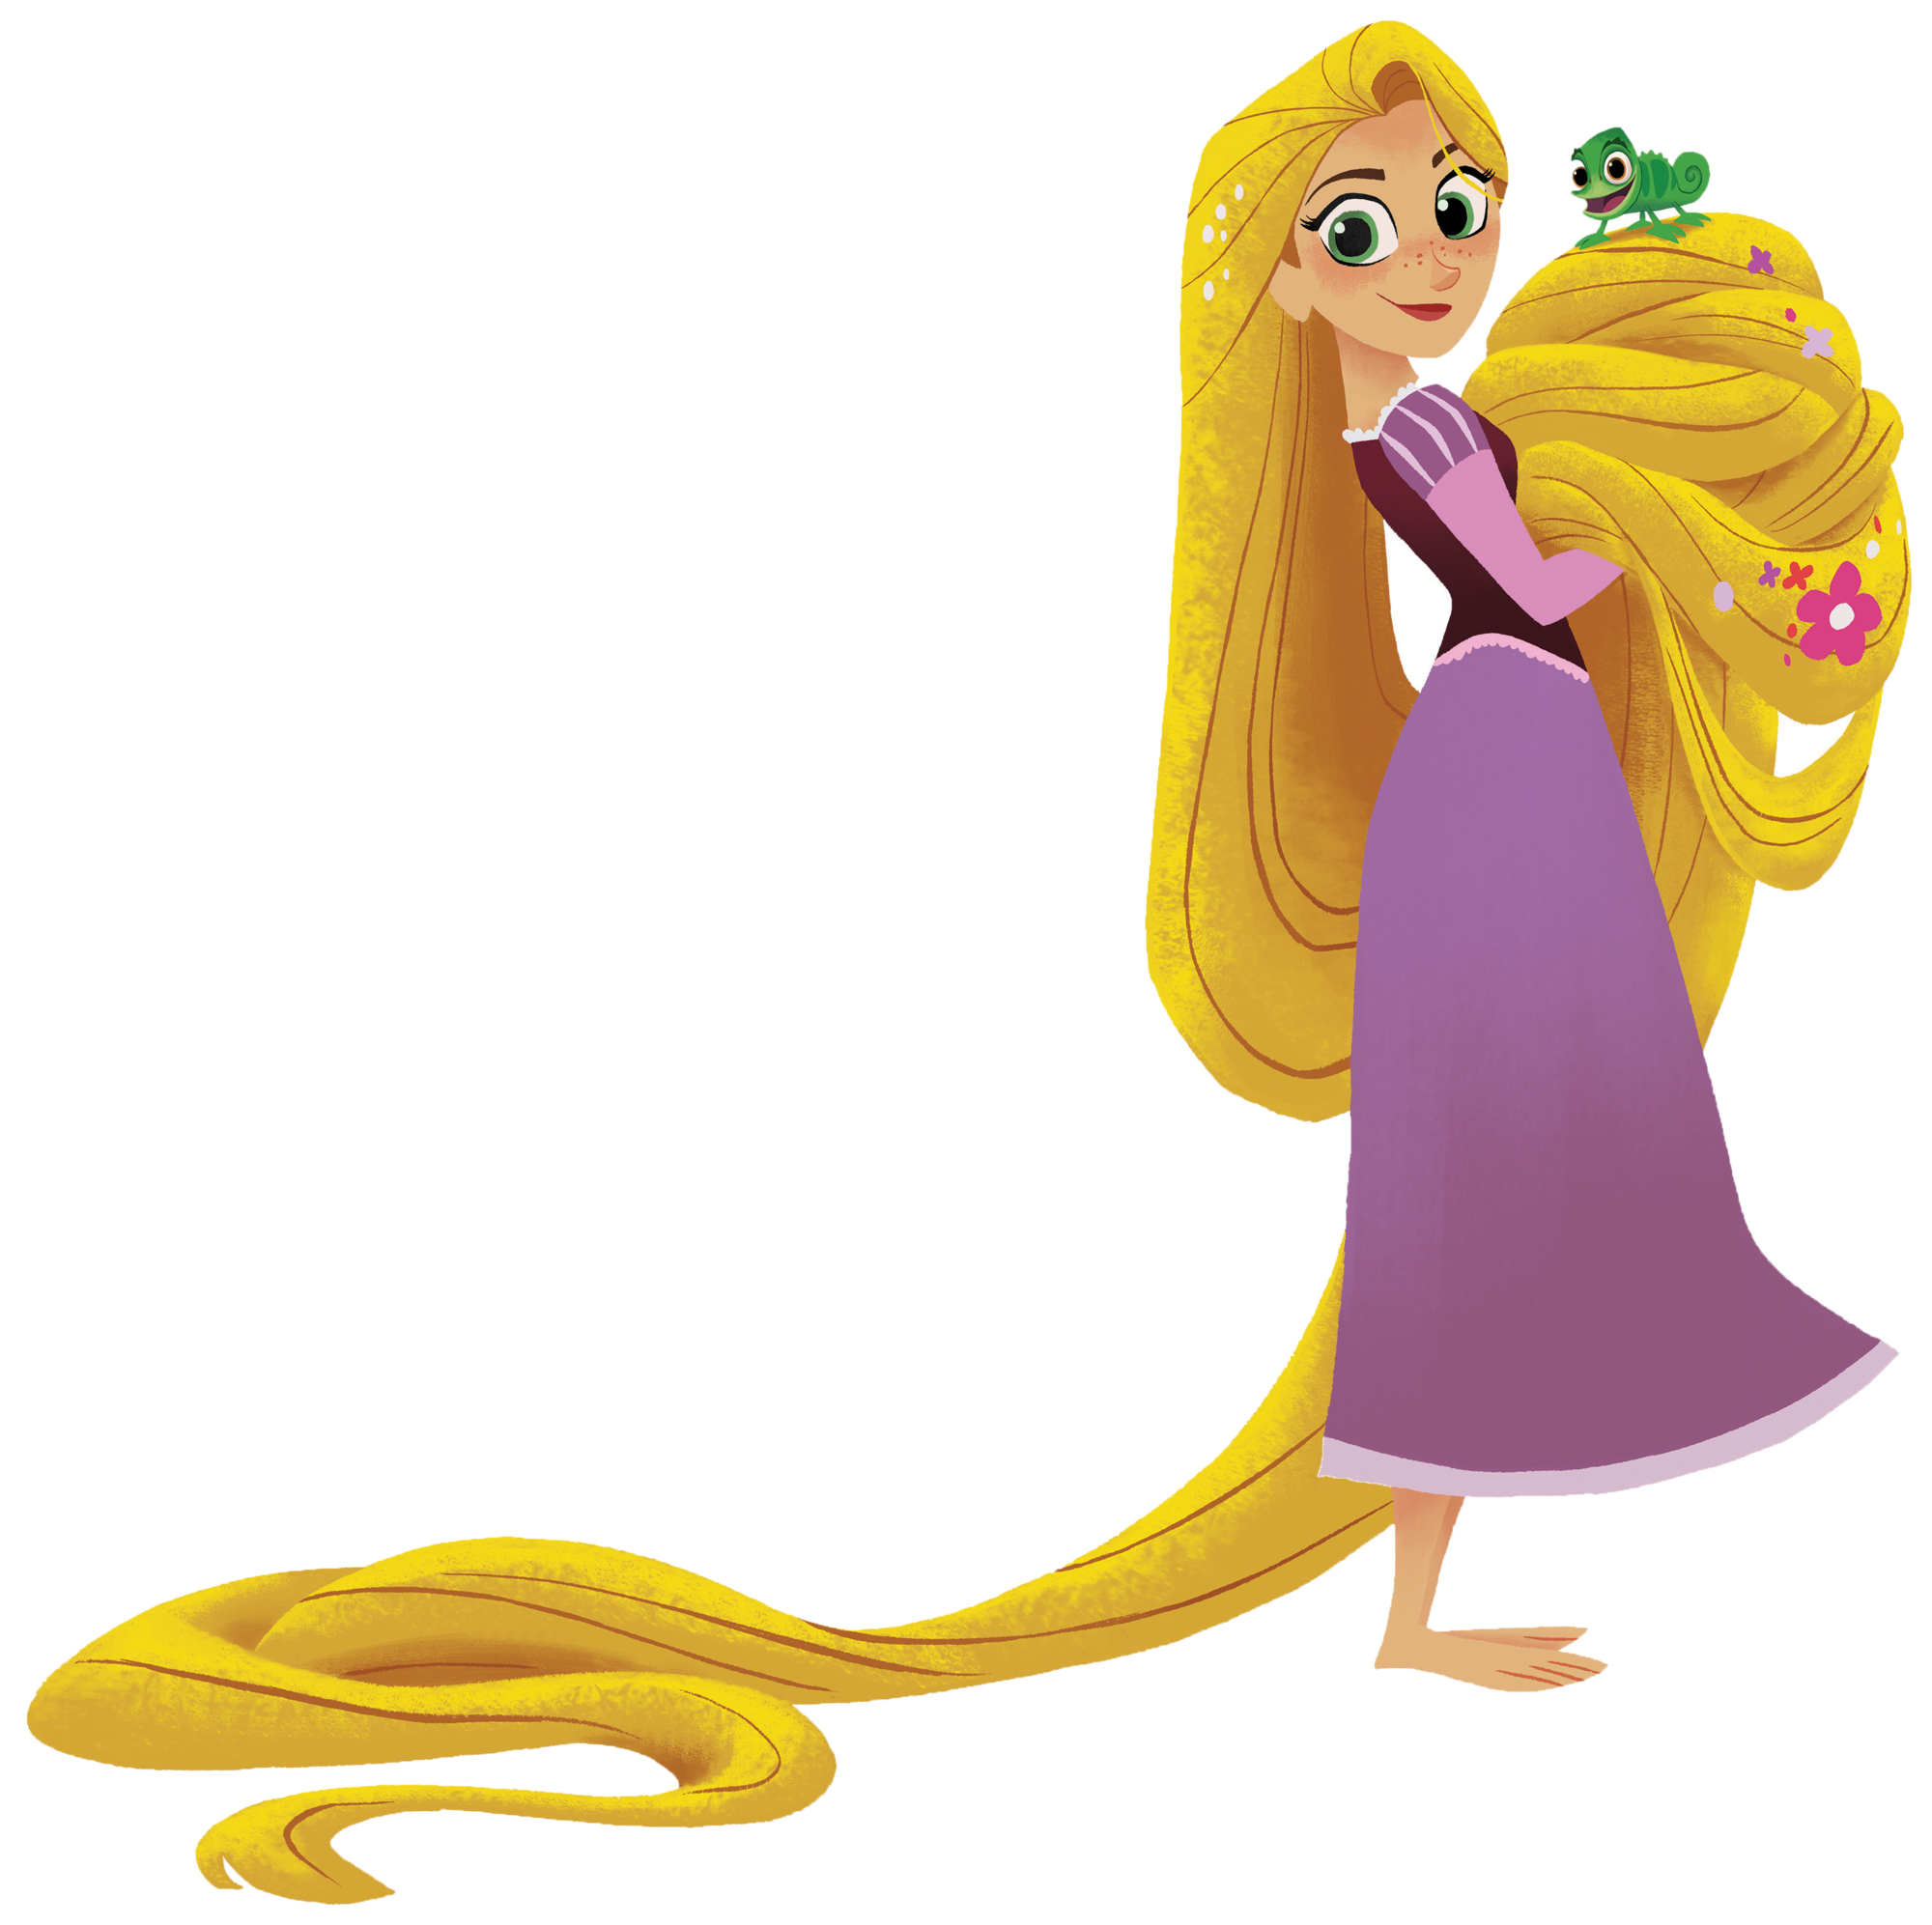 Rapunzel clipart wiki. Princess s tangled adventure